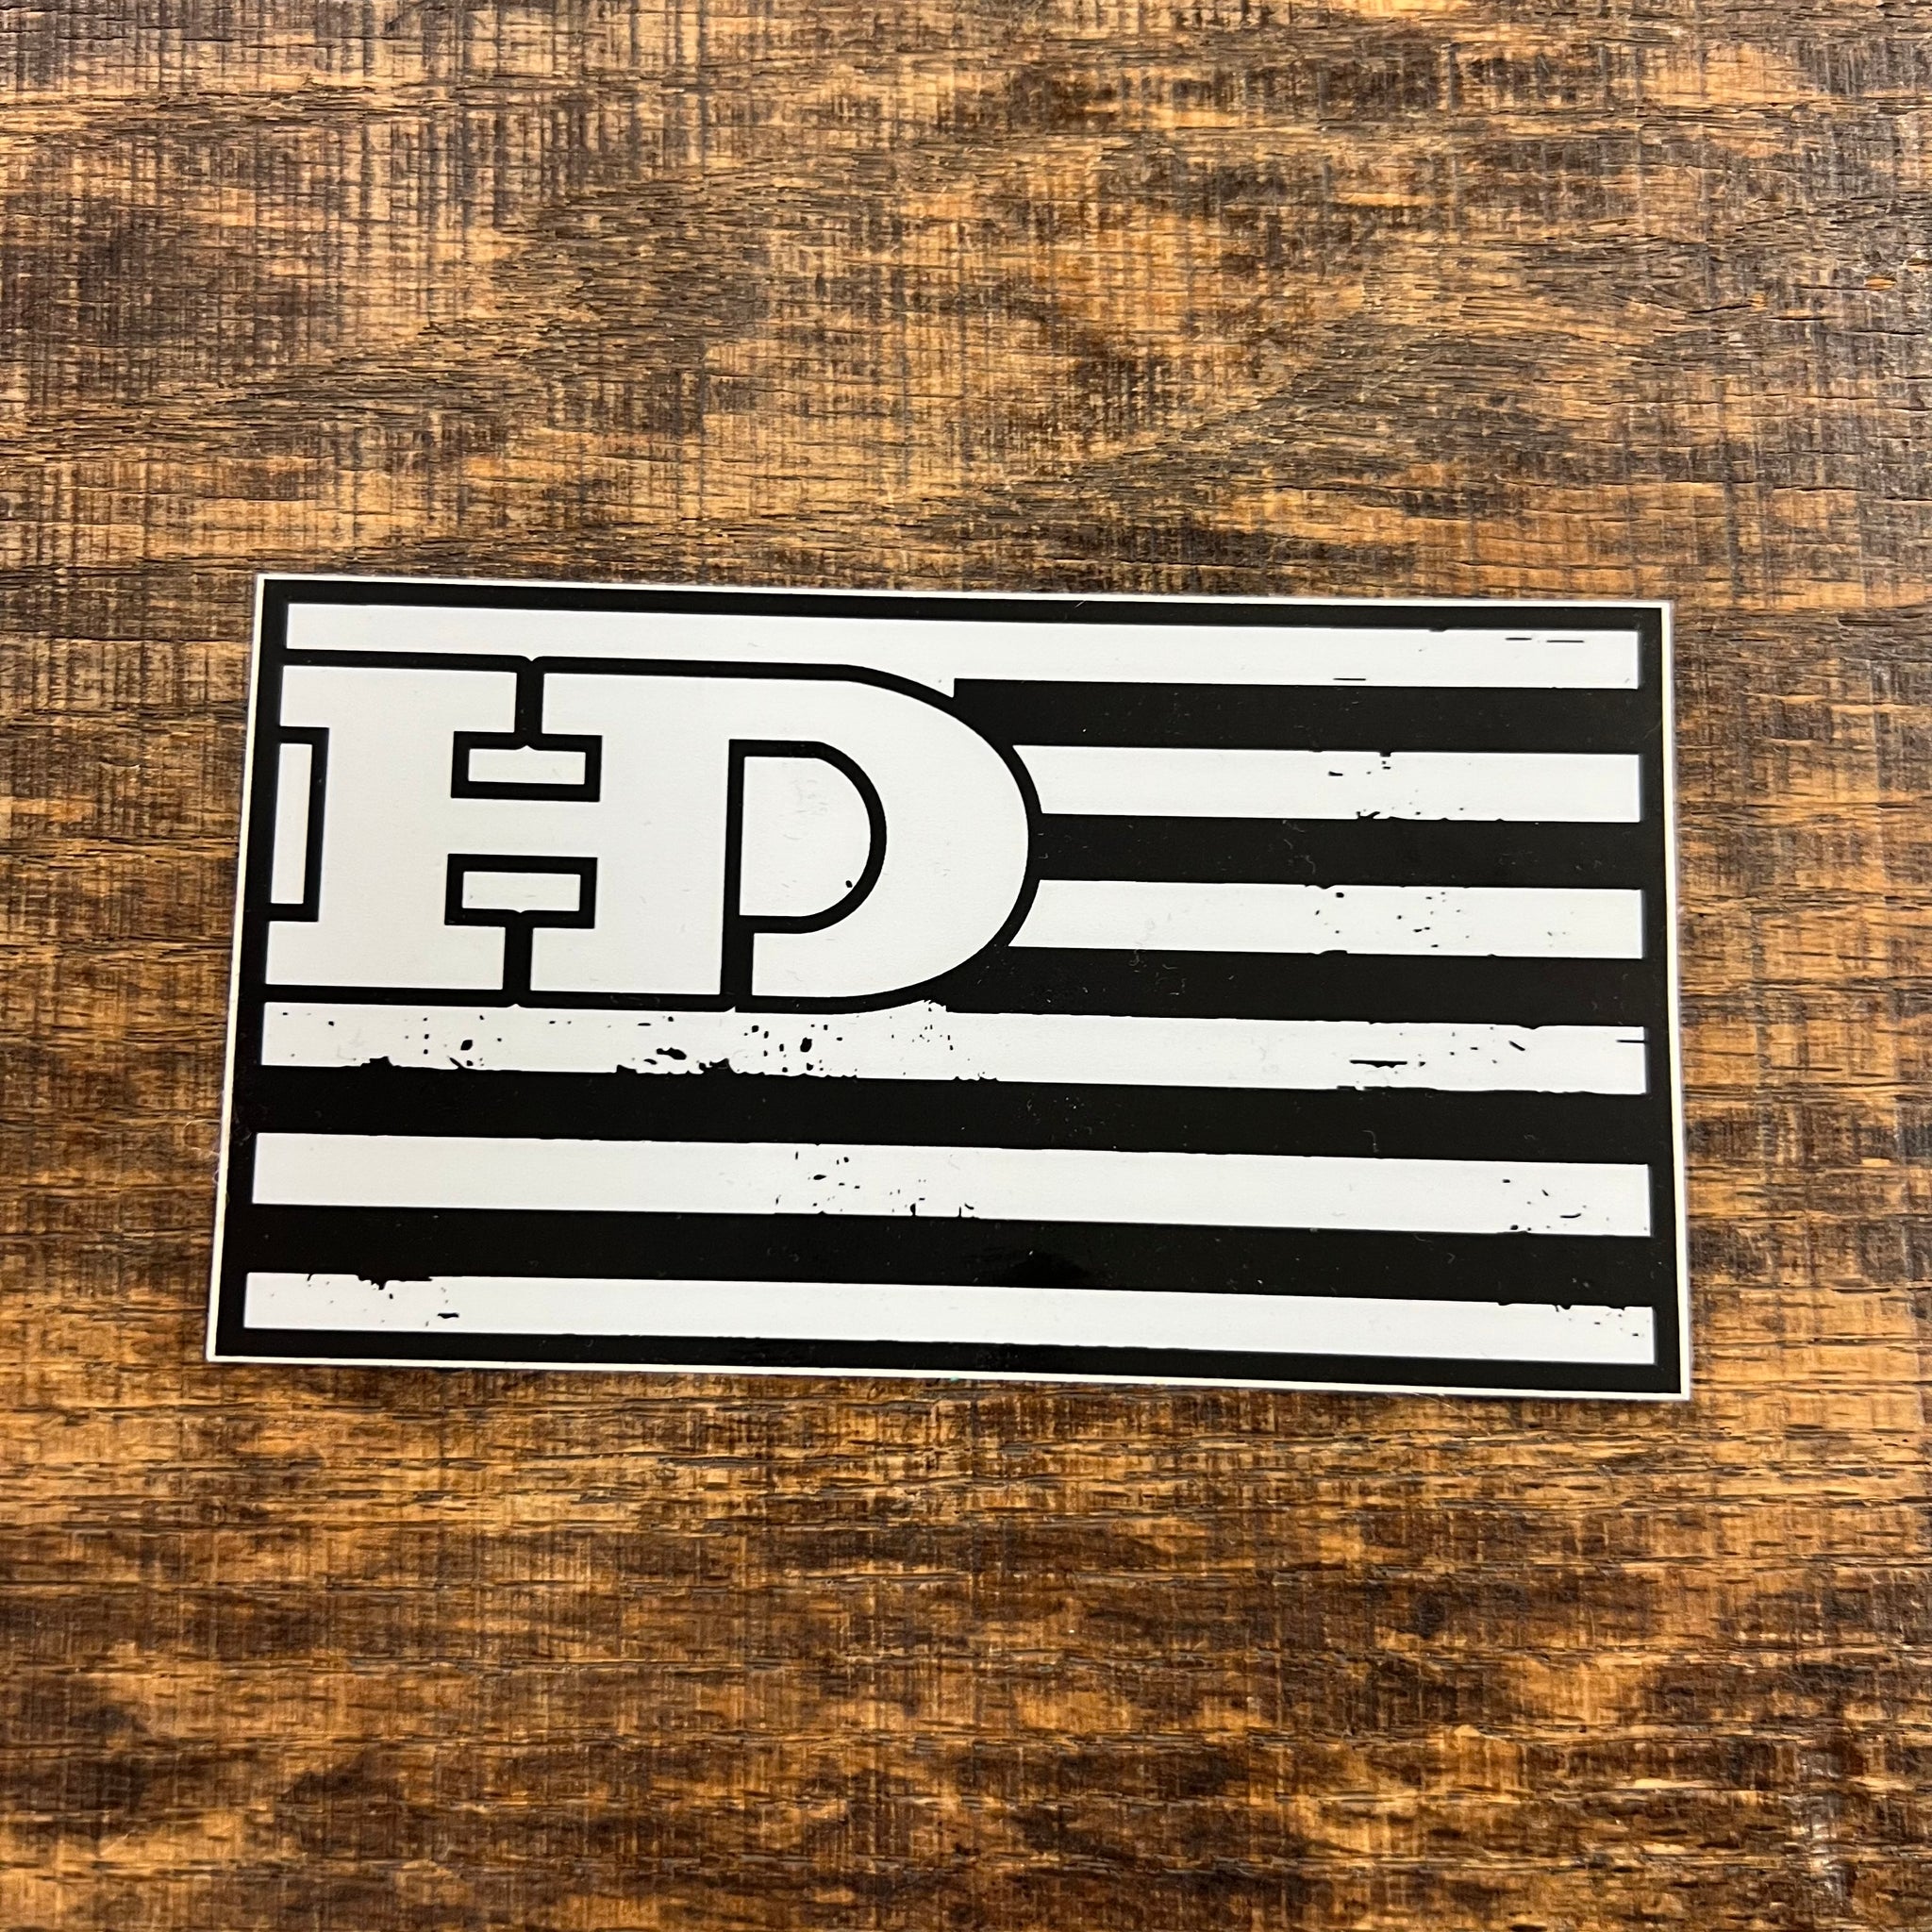 Hammer Down "HD Flag" Sticker - White and Black